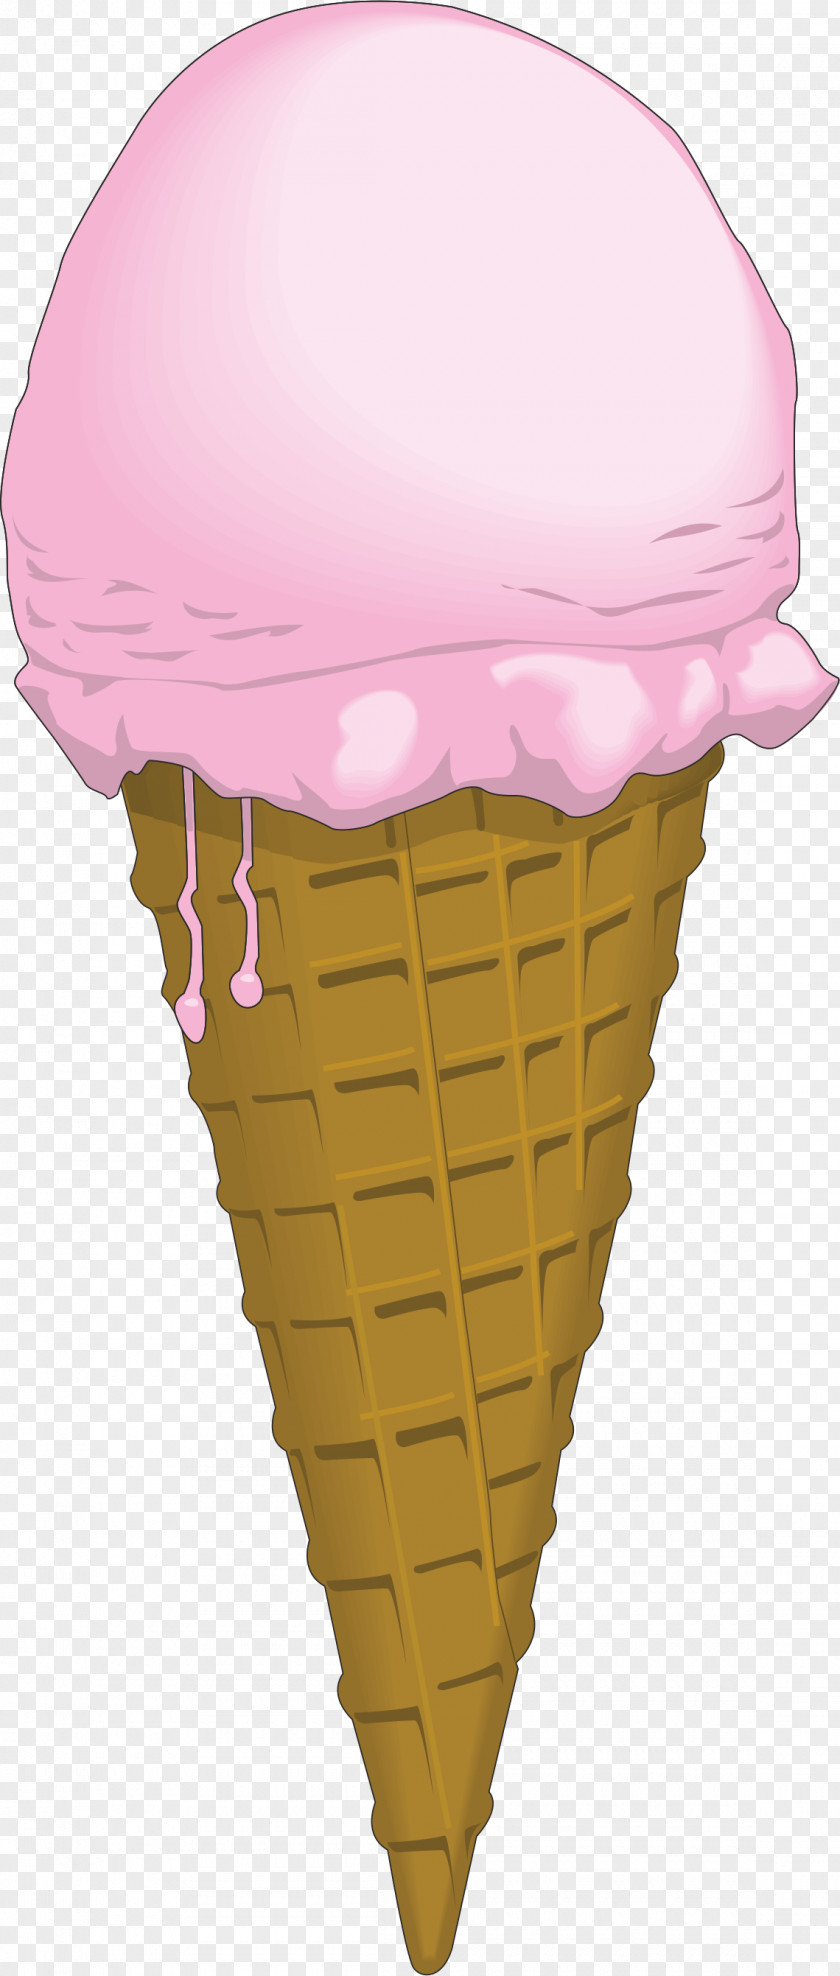 Ice Cream Cone Supply And Demand Economics Price Goods PNG